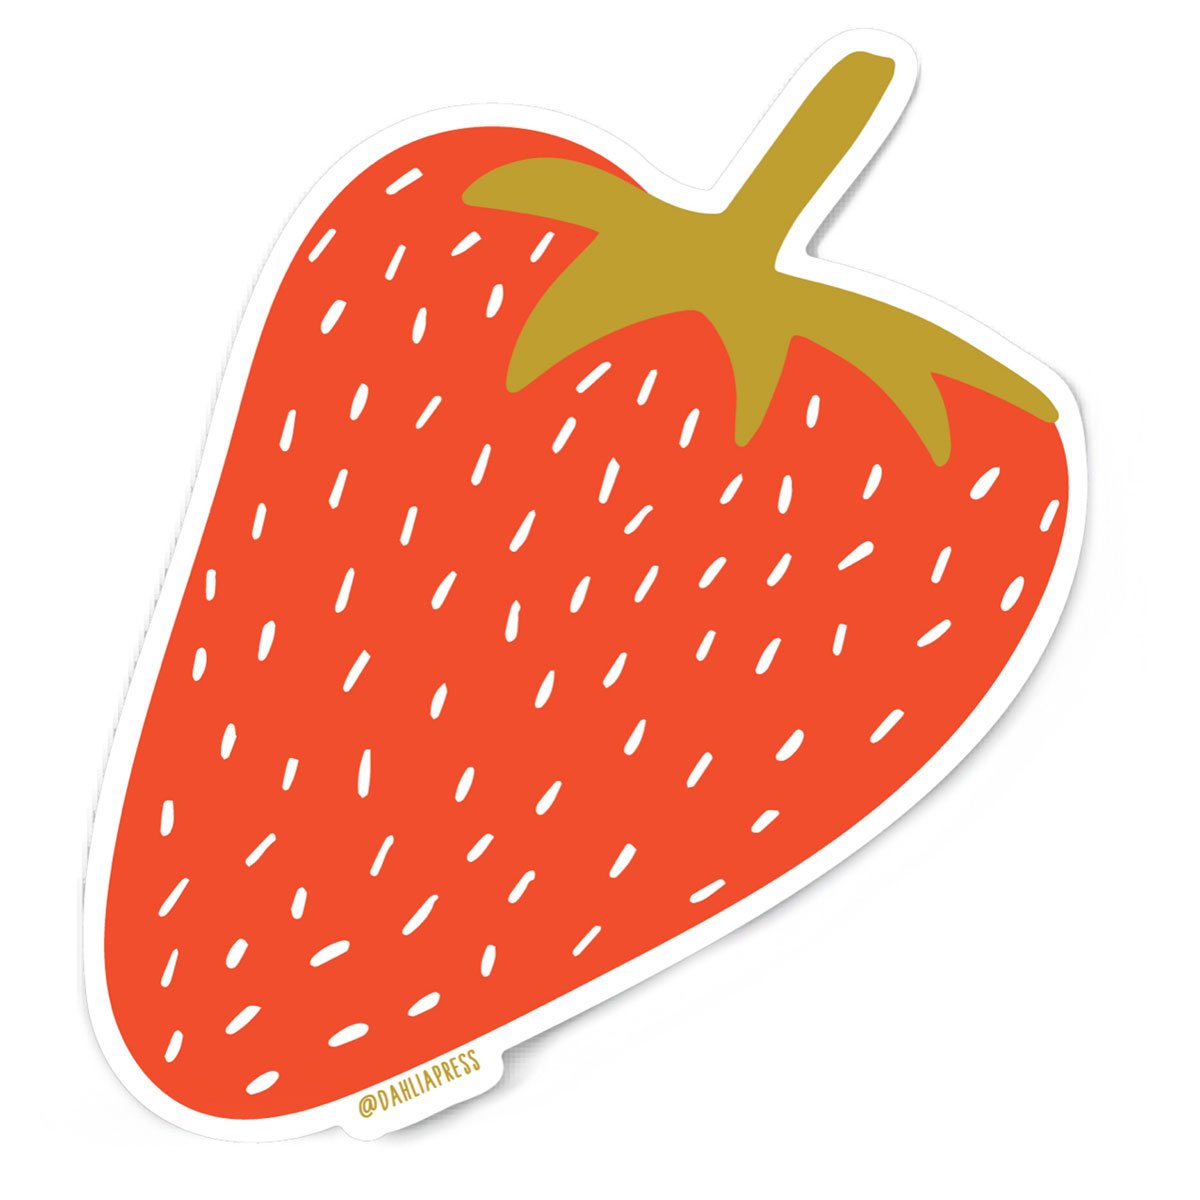 Strawberry - Sticker — Dahlia Press